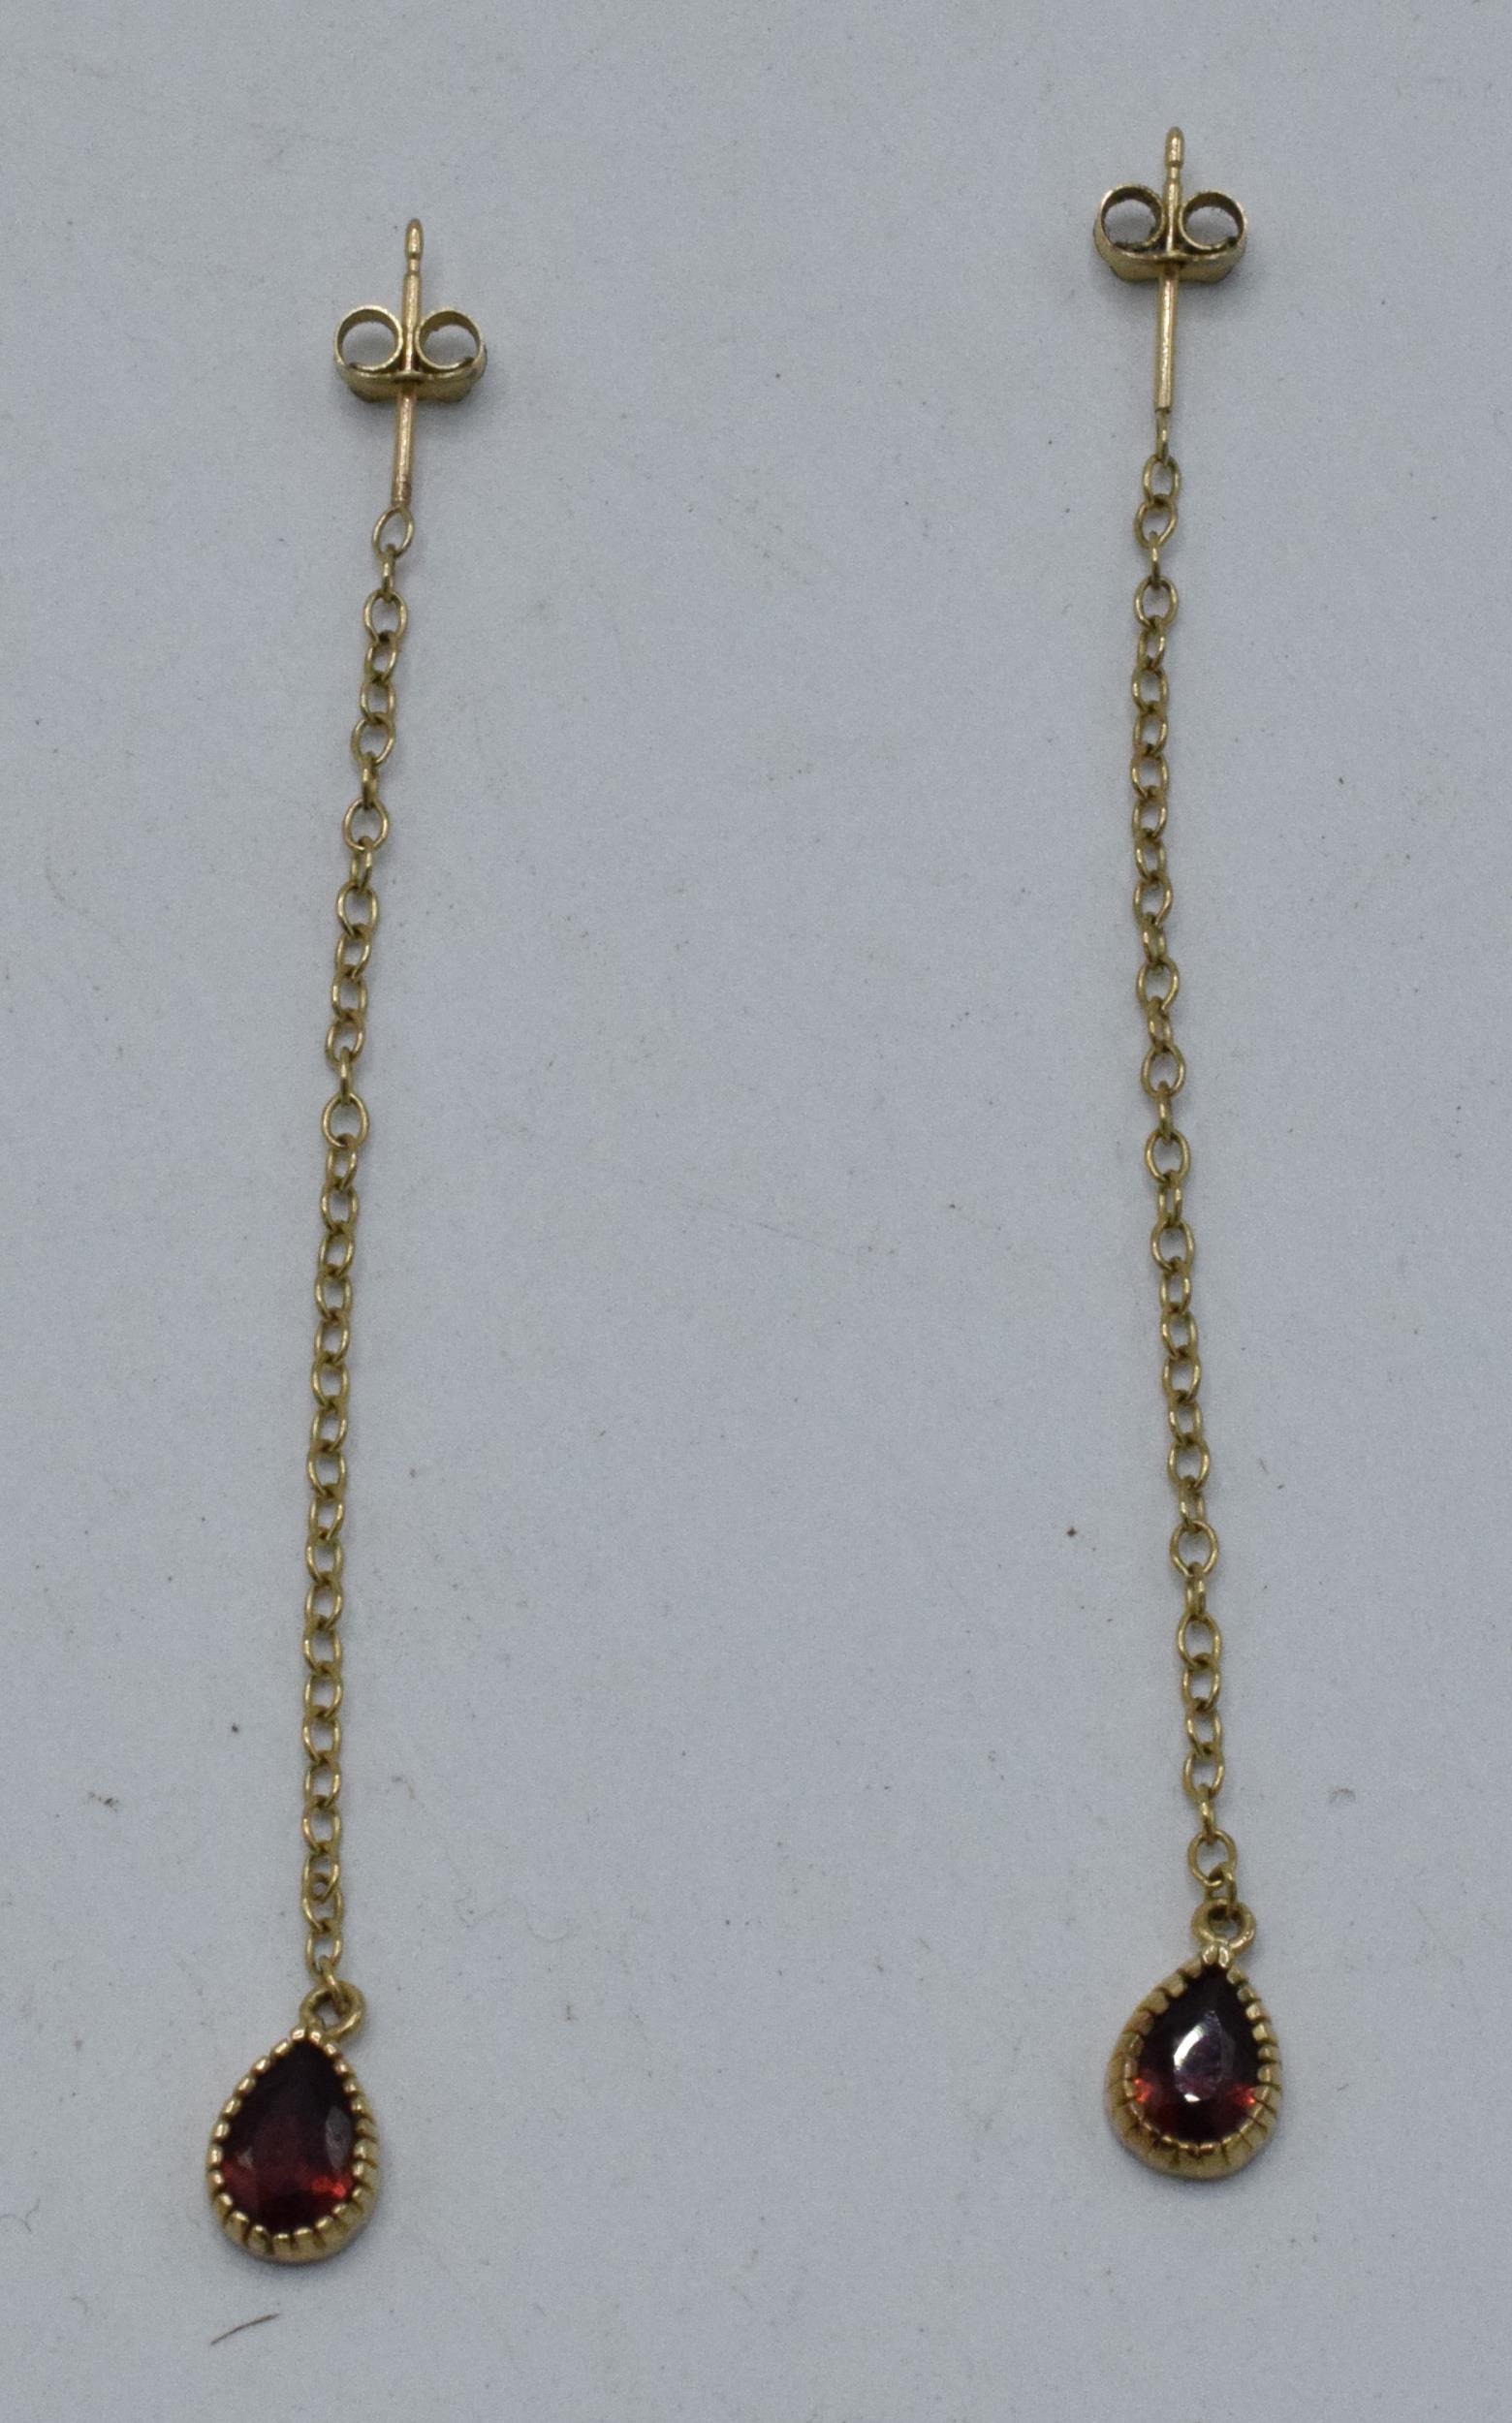 9ct gold and garnet drop earrings. 6cm long. 1.2 grams.